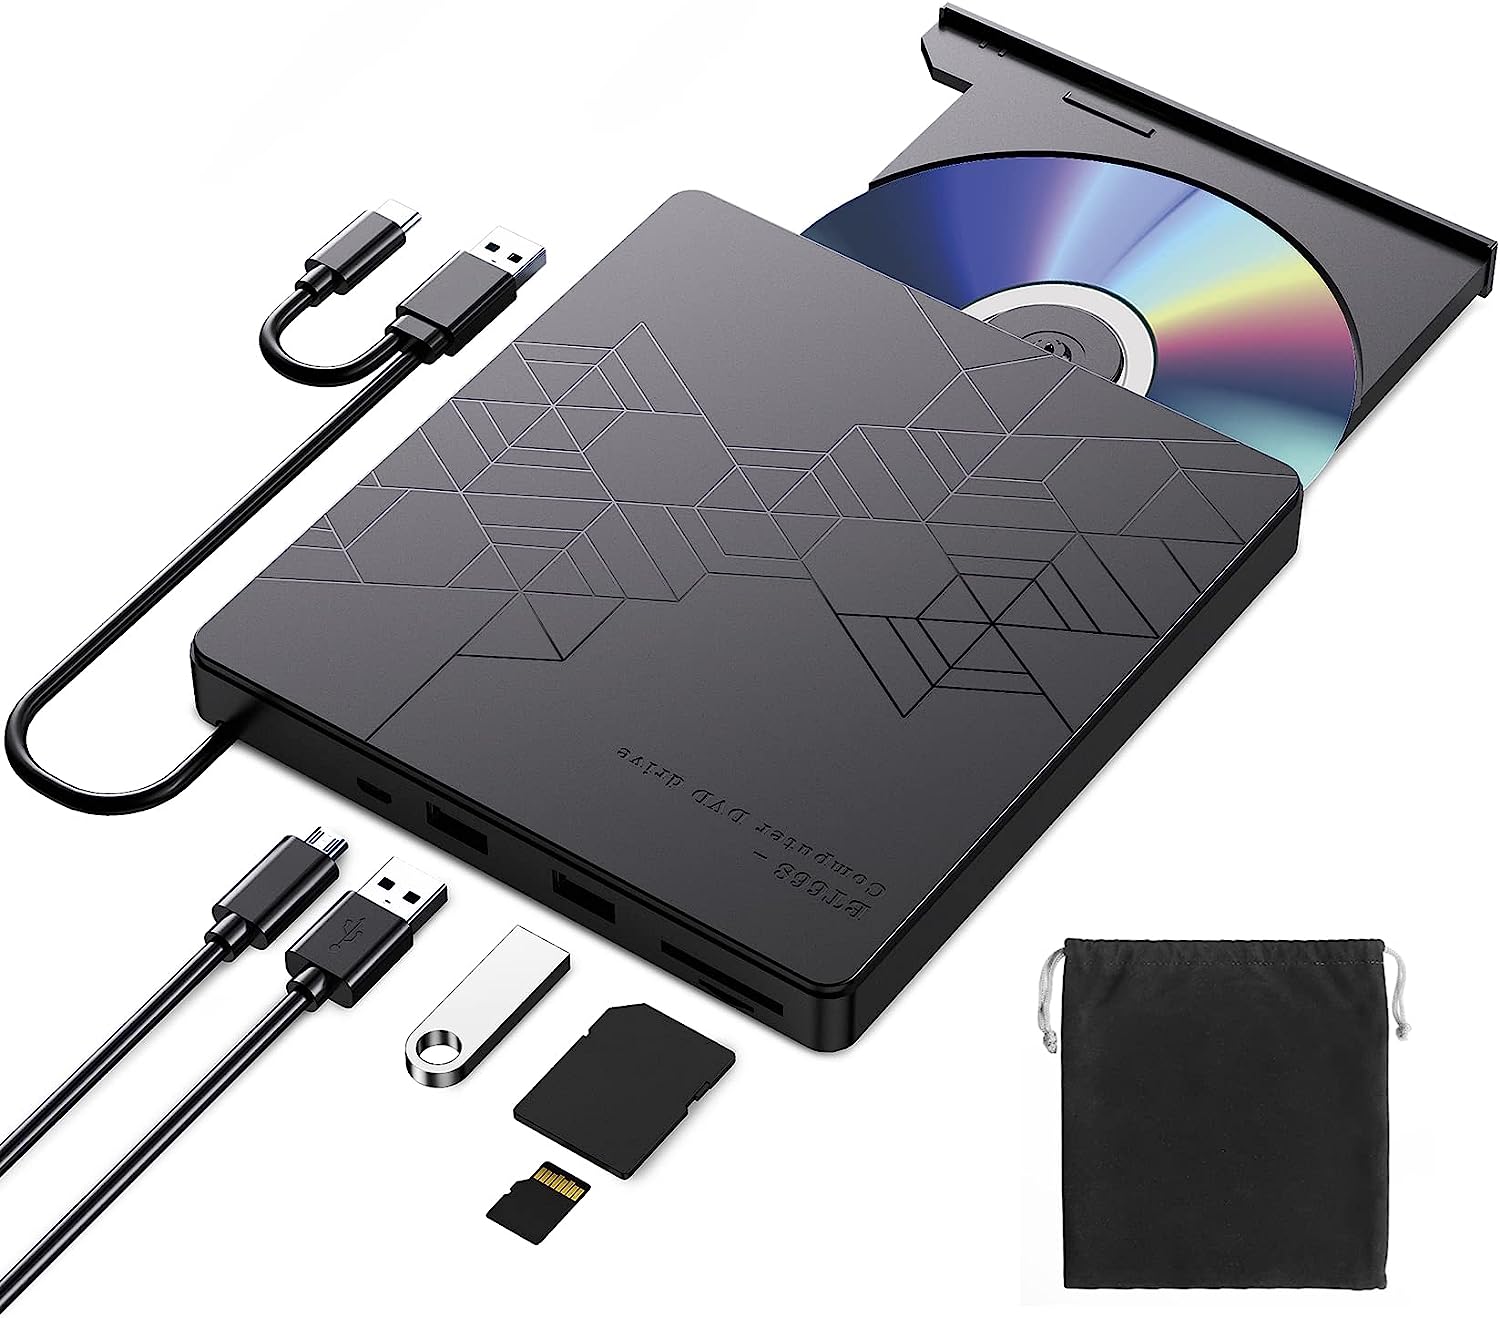 ORIGBELIE External DVD Drive, CD Drive USB 3.0 Typle C [...]